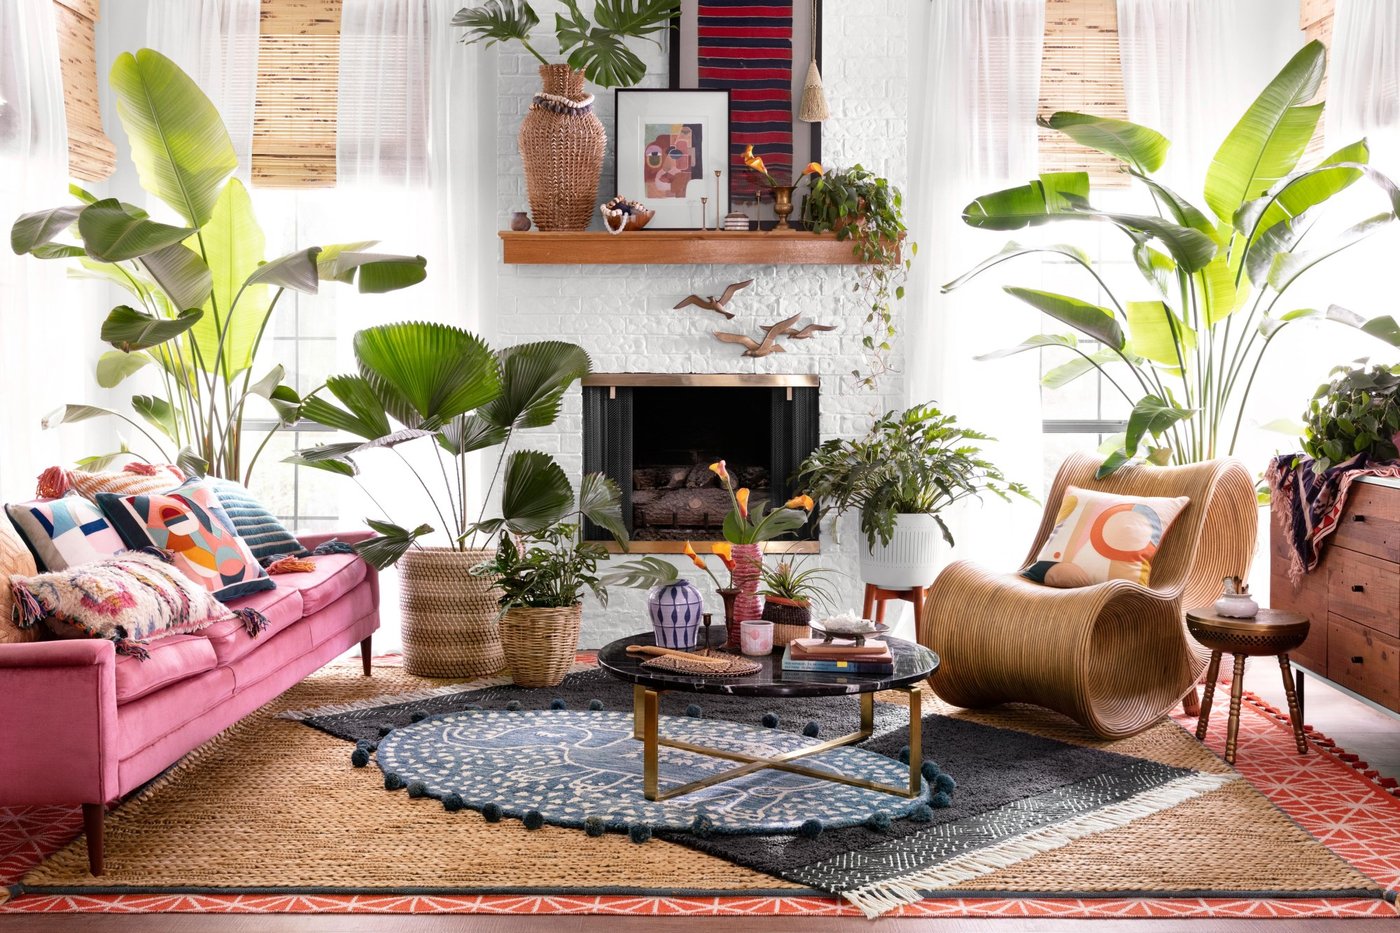 More is More - Boho Living Room Ideas